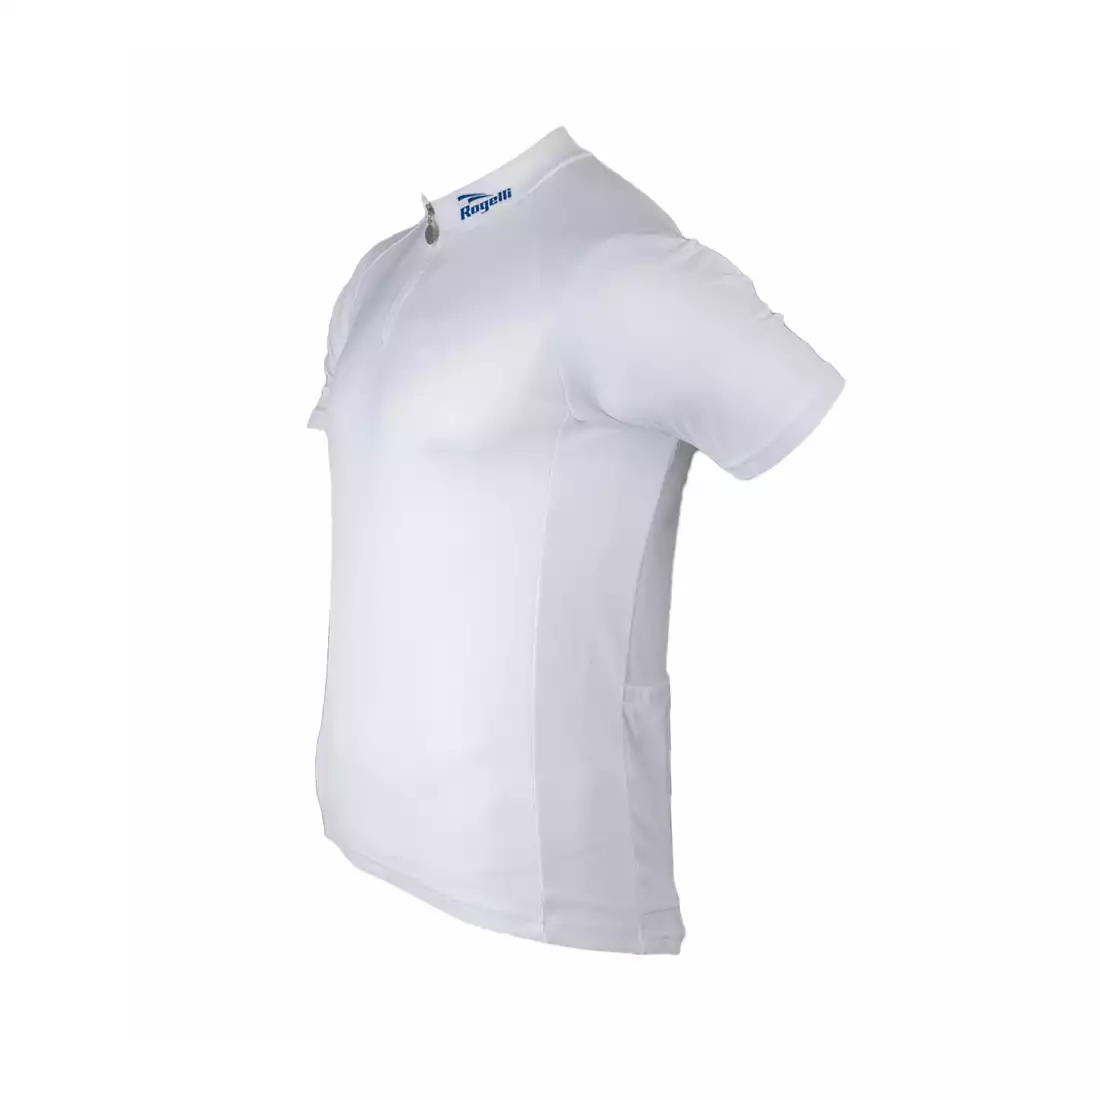 ROGELLI SOLID - meska koszulka rowerowa, Kolor: Biały